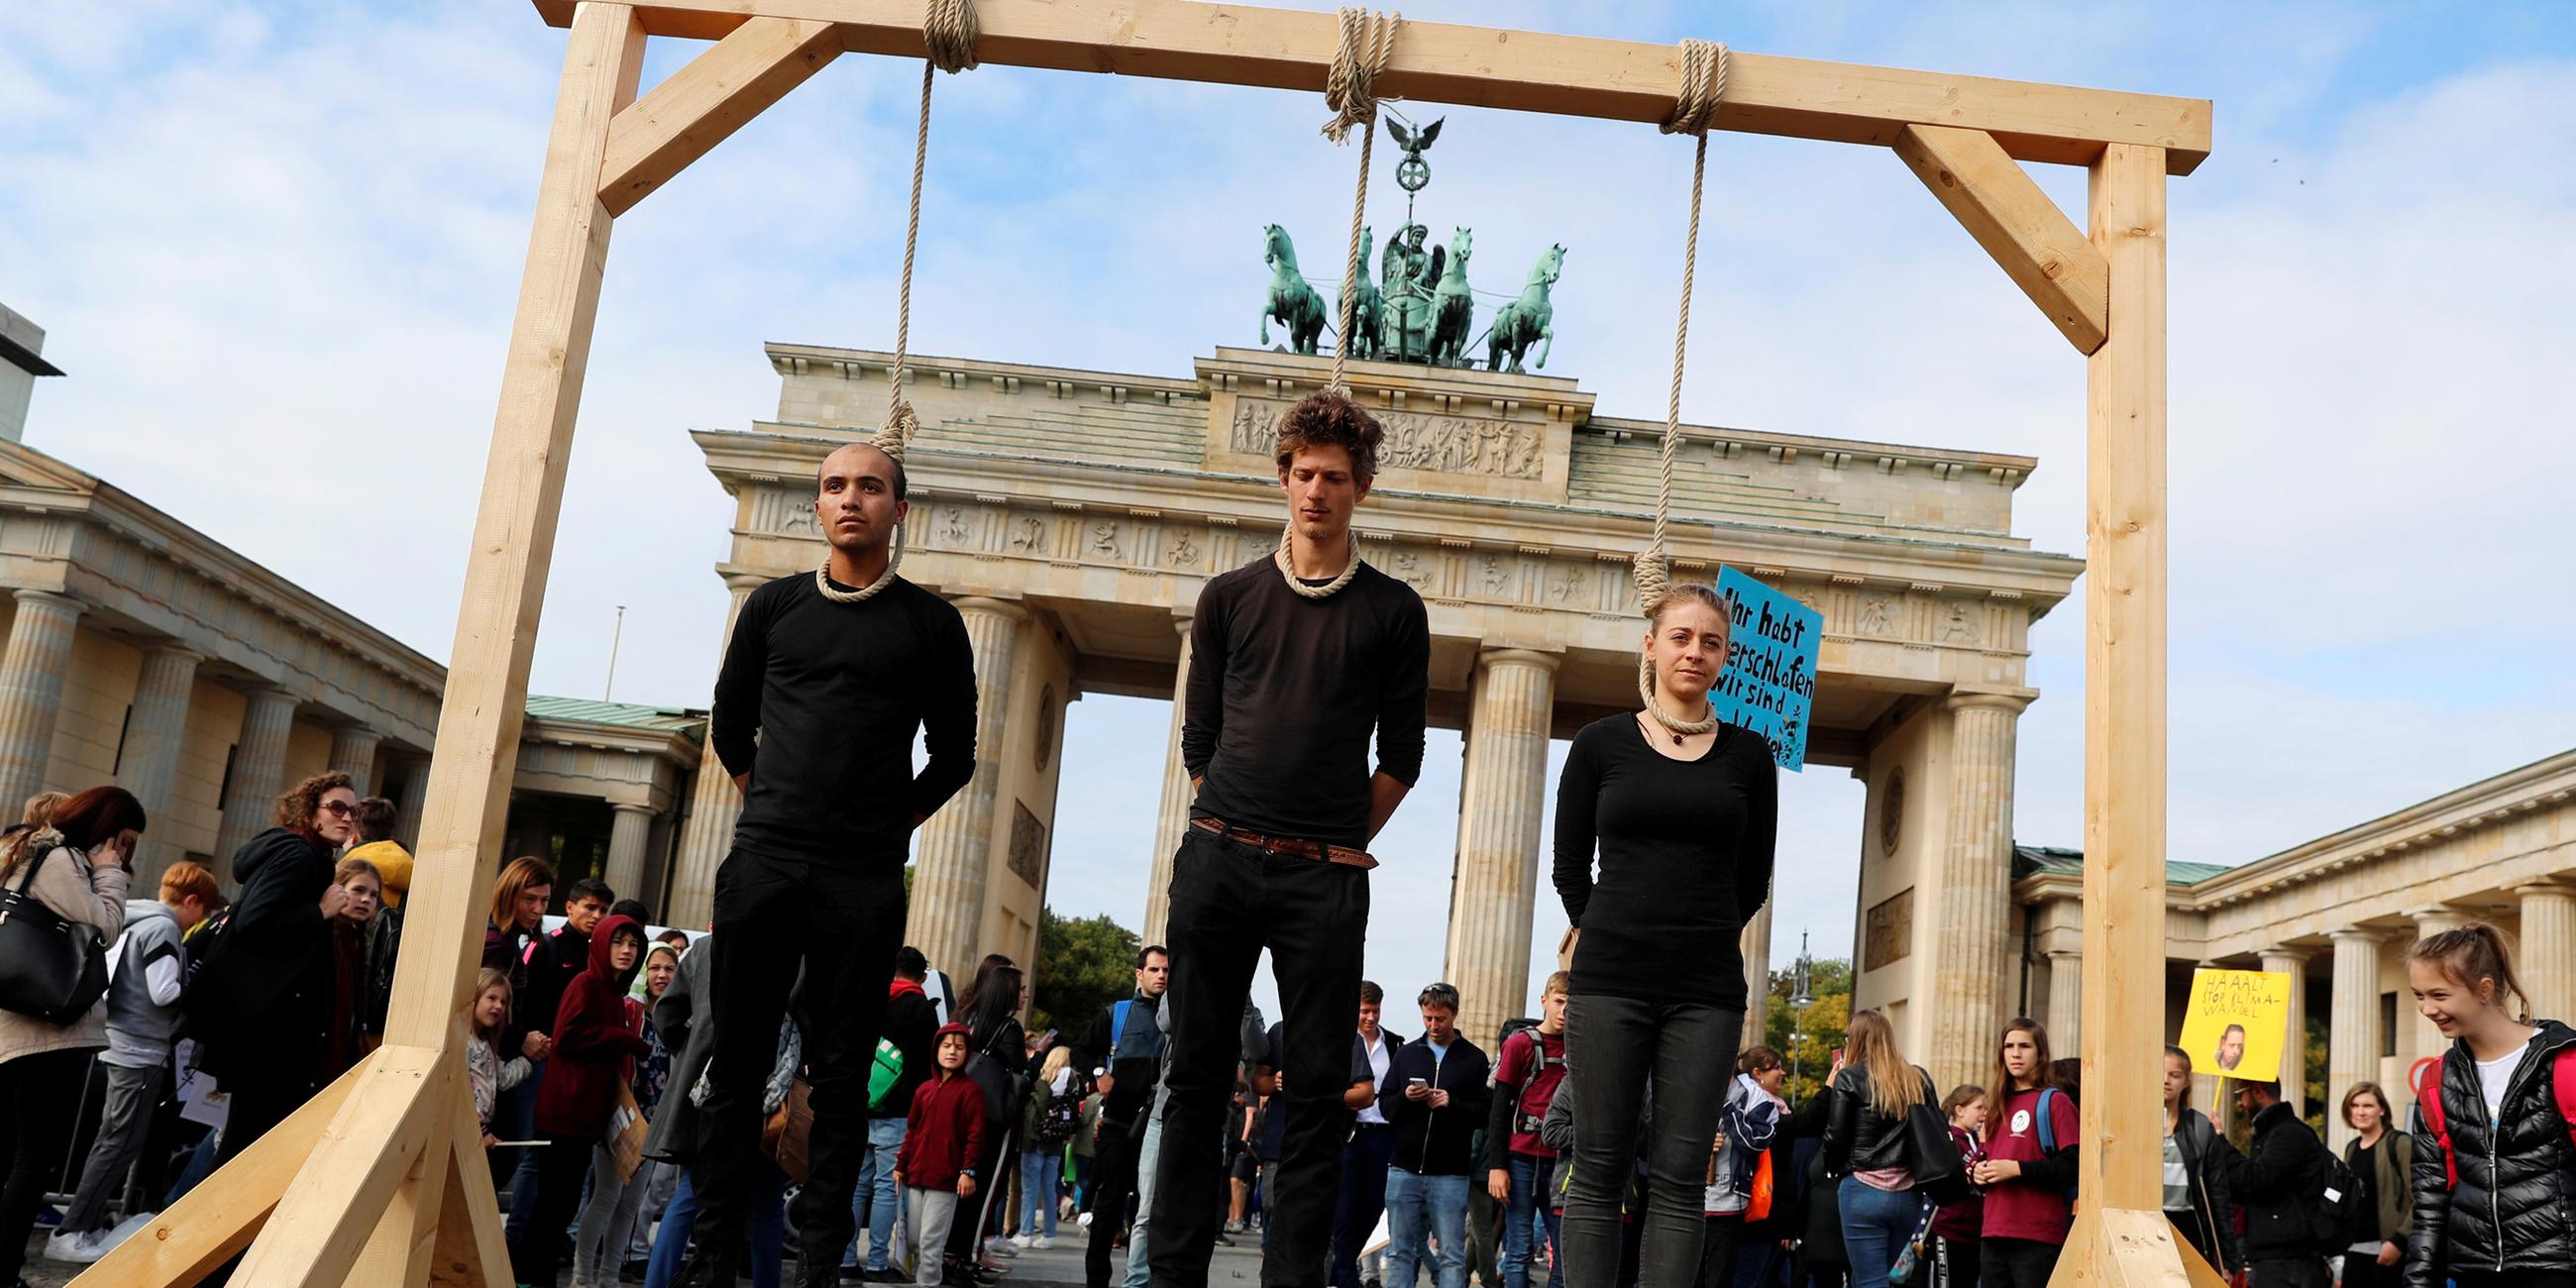 Klimastreik in Berlin am 20.09.2019 in